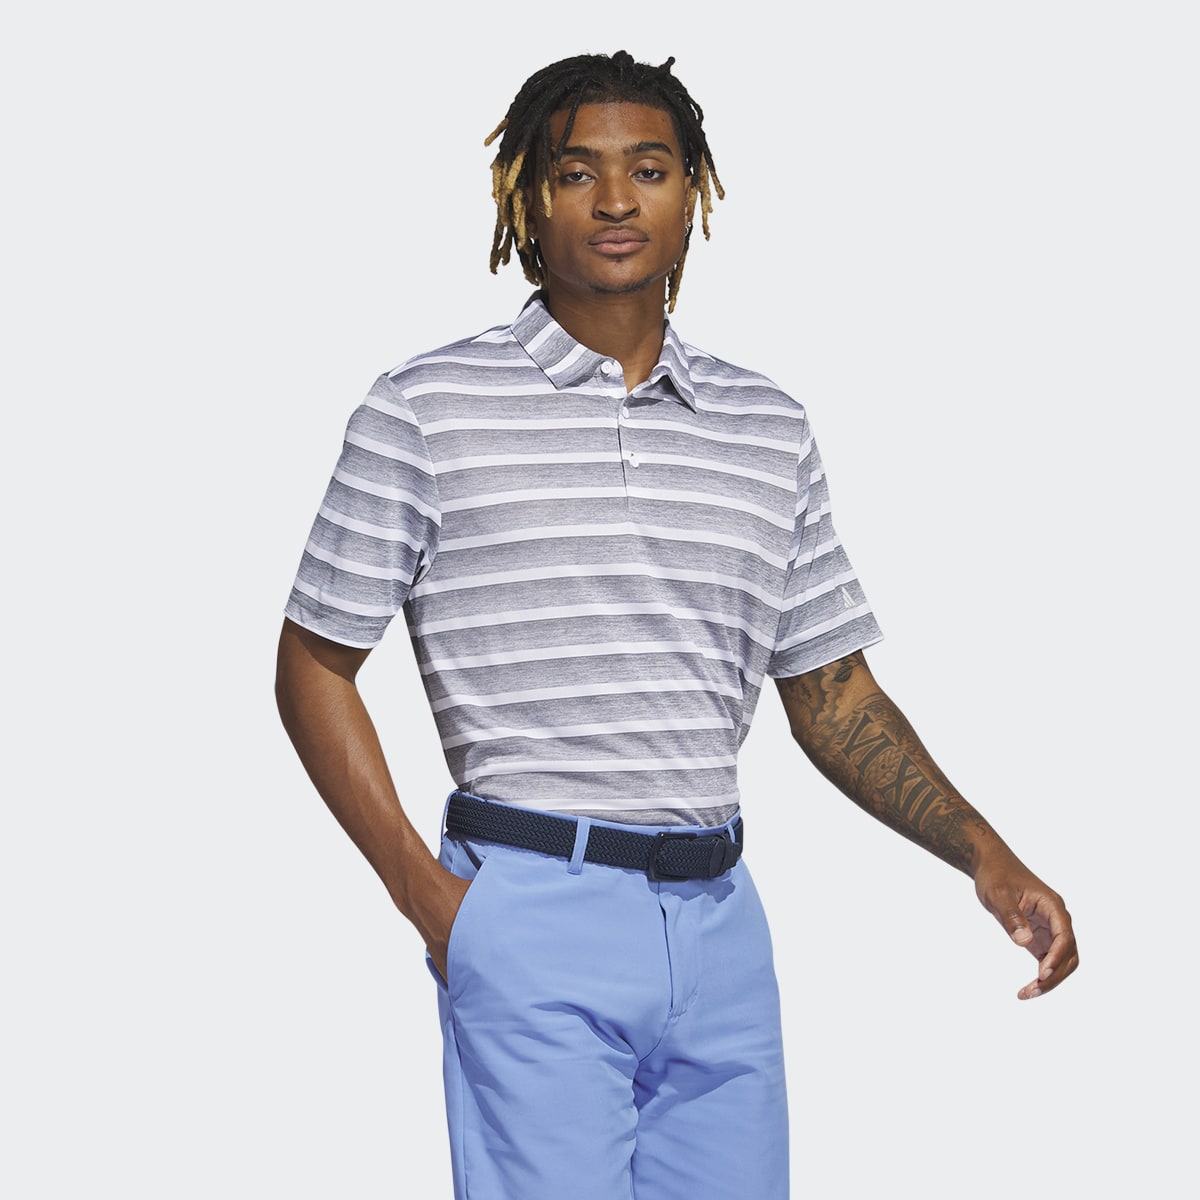 Adidas Two-Color Striped Polo Shirt. 4